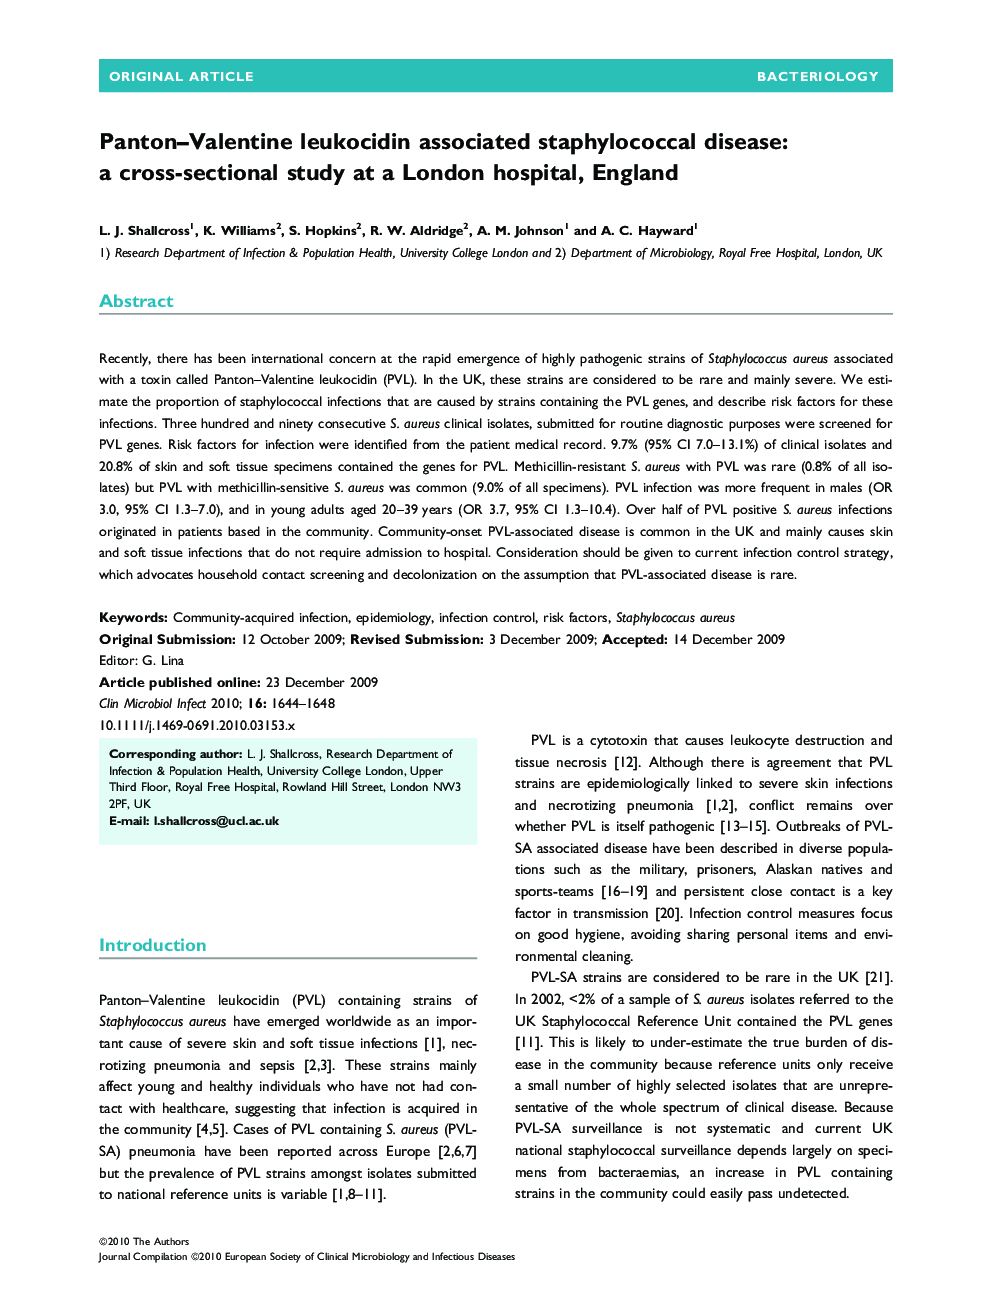 Panton-Valentine leukocidin associated staphylococcal disease: a cross-sectional study at a London hospital, England